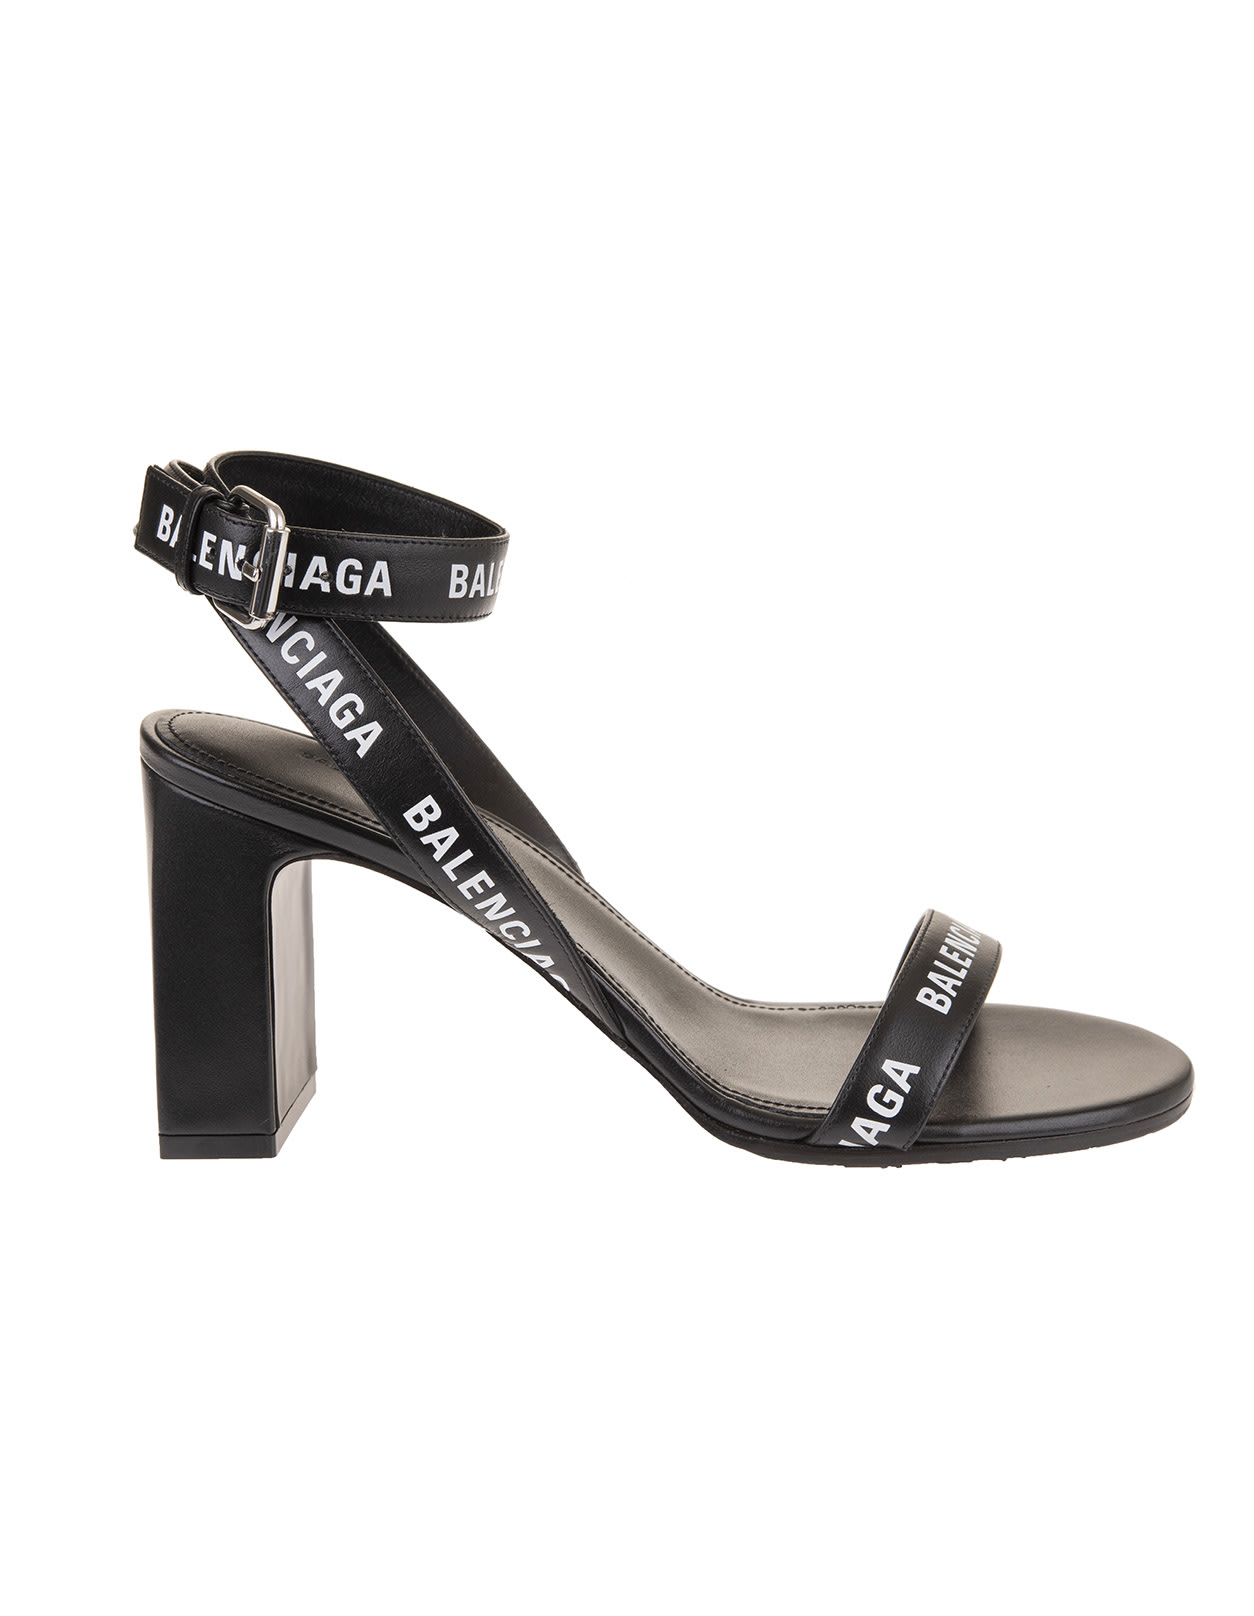 Buy Balenciaga Black Sandal With Logoed Straps online, shop Balenciaga shoes with free shipping